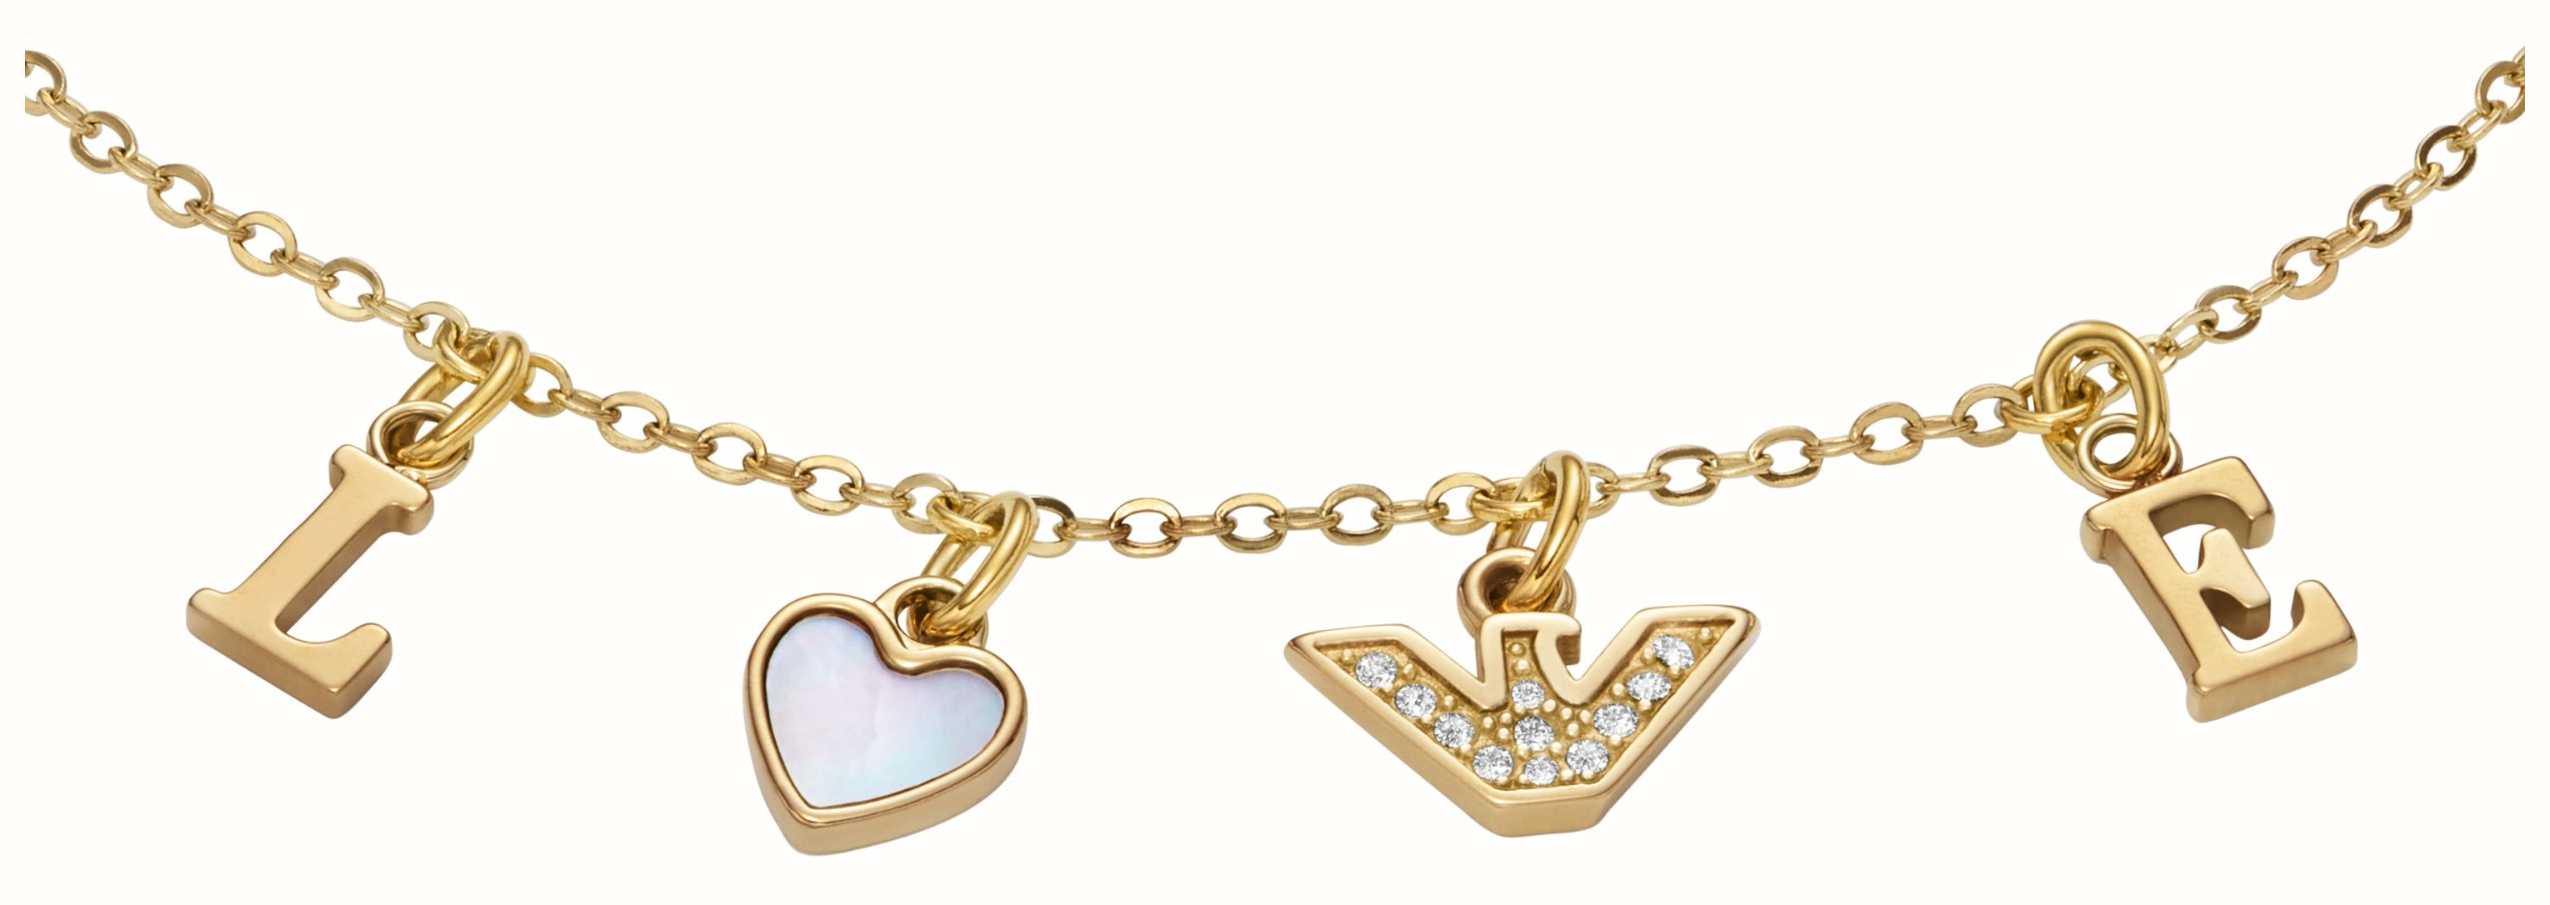 Emporio Armani Women's Love Bracelet | Gold-Tone Stainless Steel